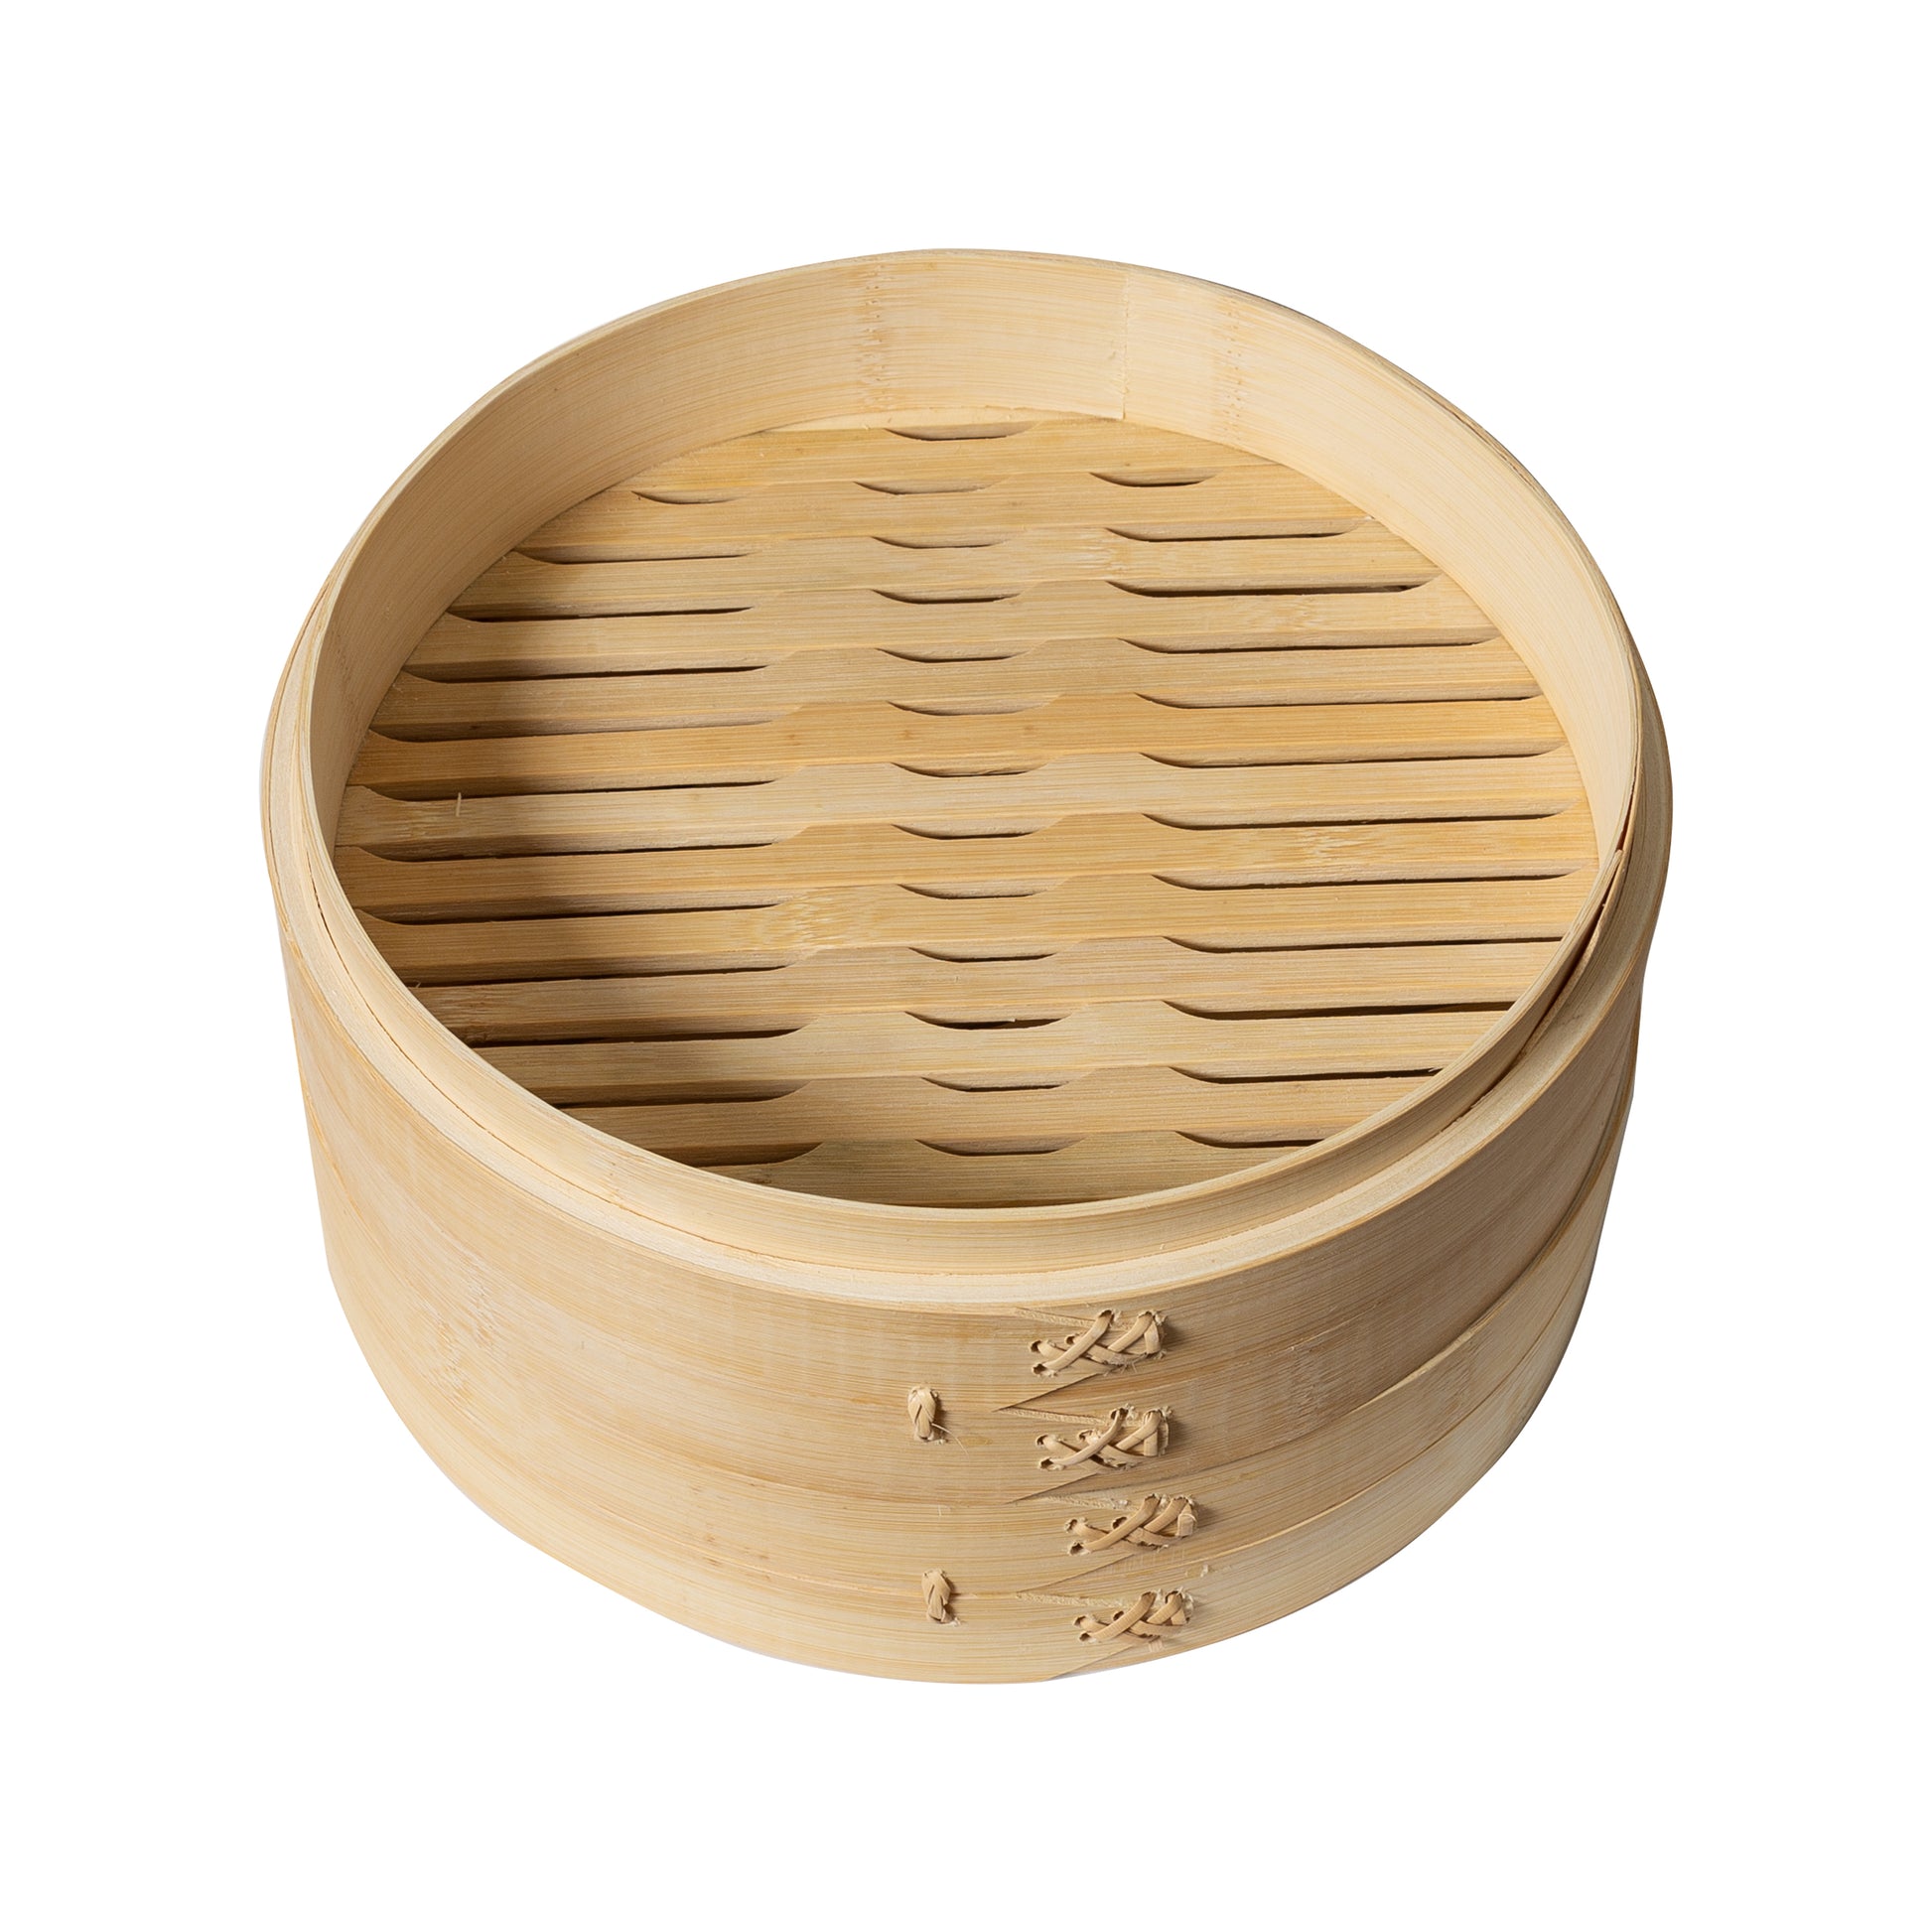 Prime Home Direct Bamboo Steamer Basket 10-inch , 2-Tier Steamer for  Cooking , 50 Liners, Chopsticks & Sauce Dish , Dumpling Steamer, Food  Steamer